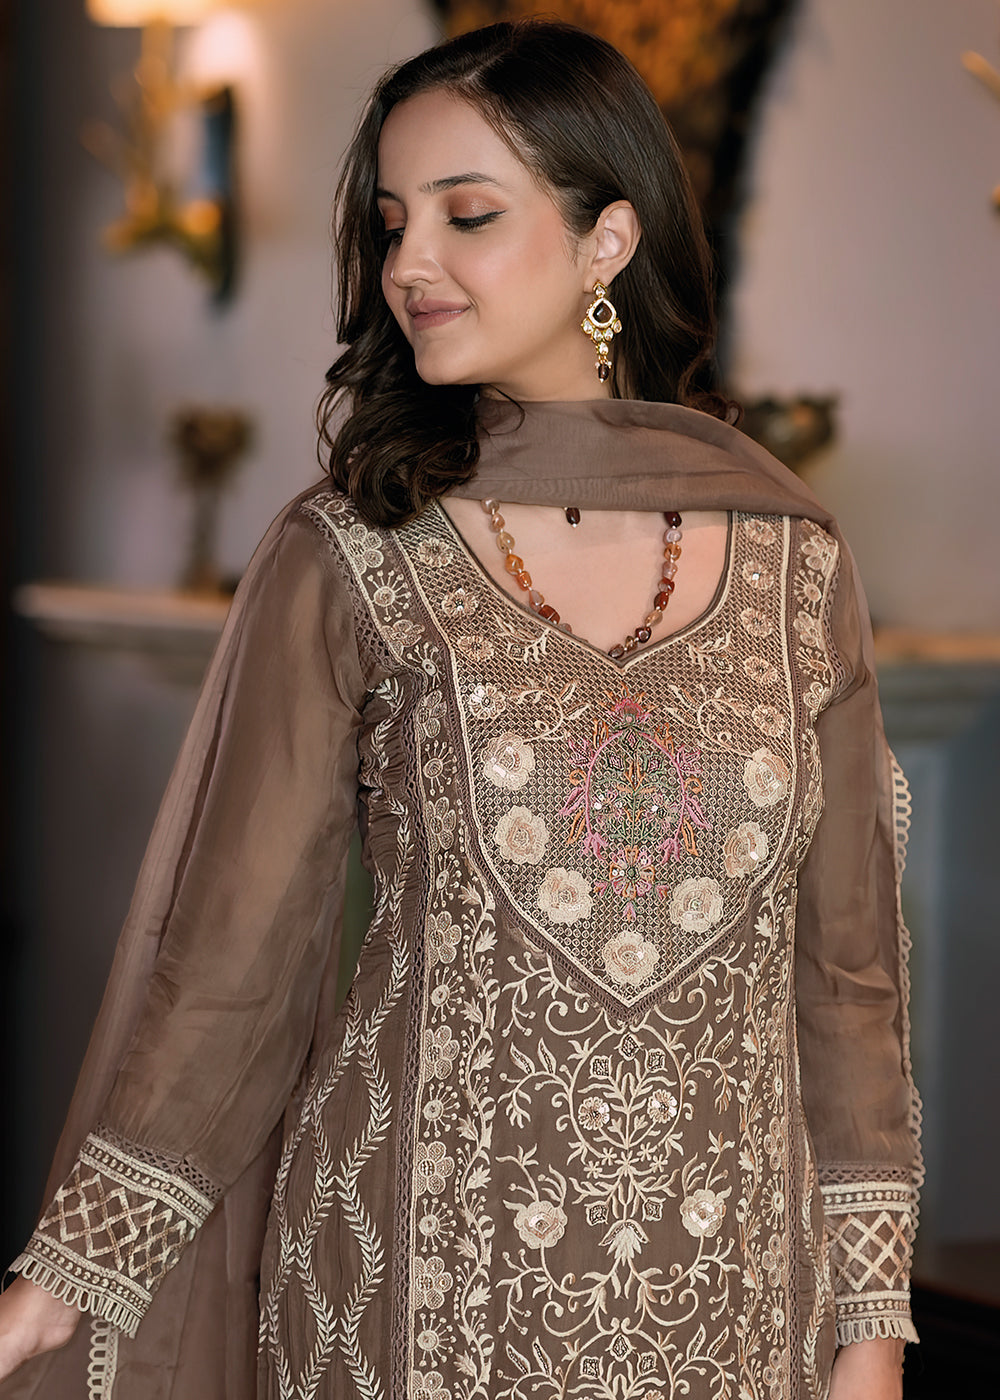 Buy Now Brown Organza Fancy Khatli Work Pakistani Style Salwar Suit Online in USA, UK, Canada, Germany, Australia & Worldwide at Empress Clothing.